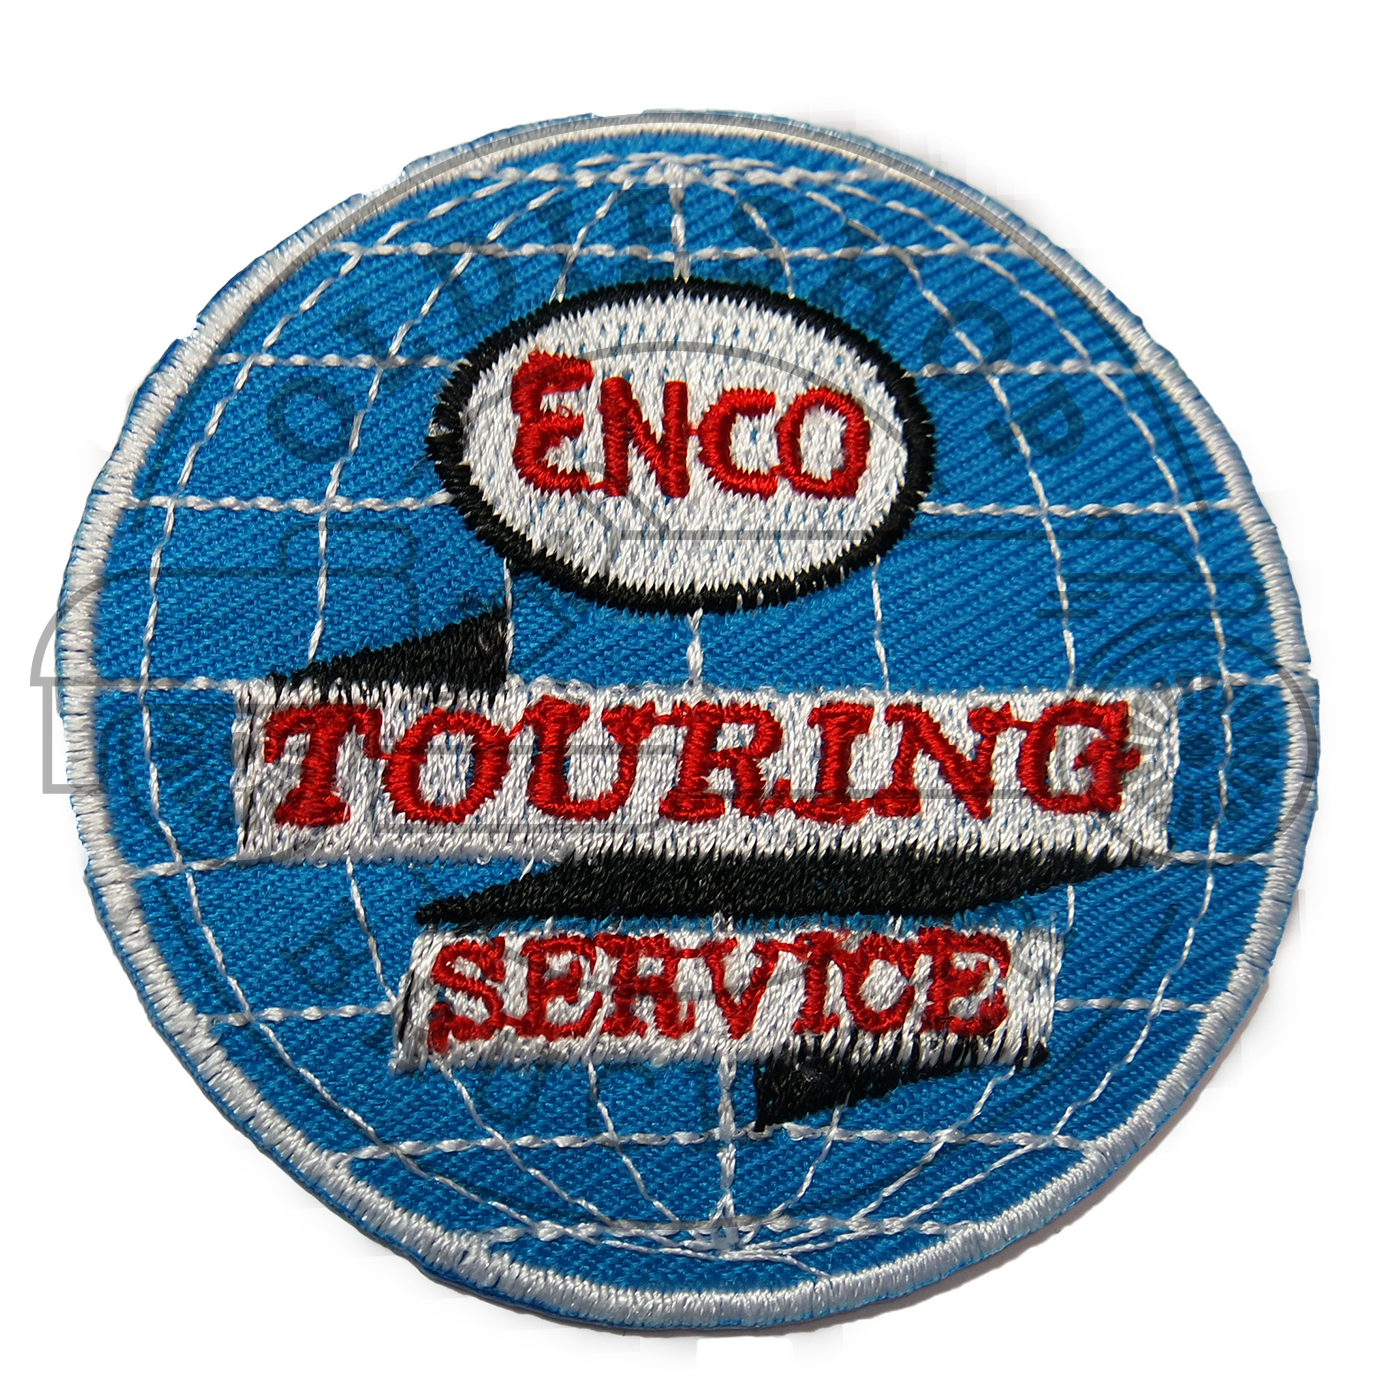 Enco Touring Service